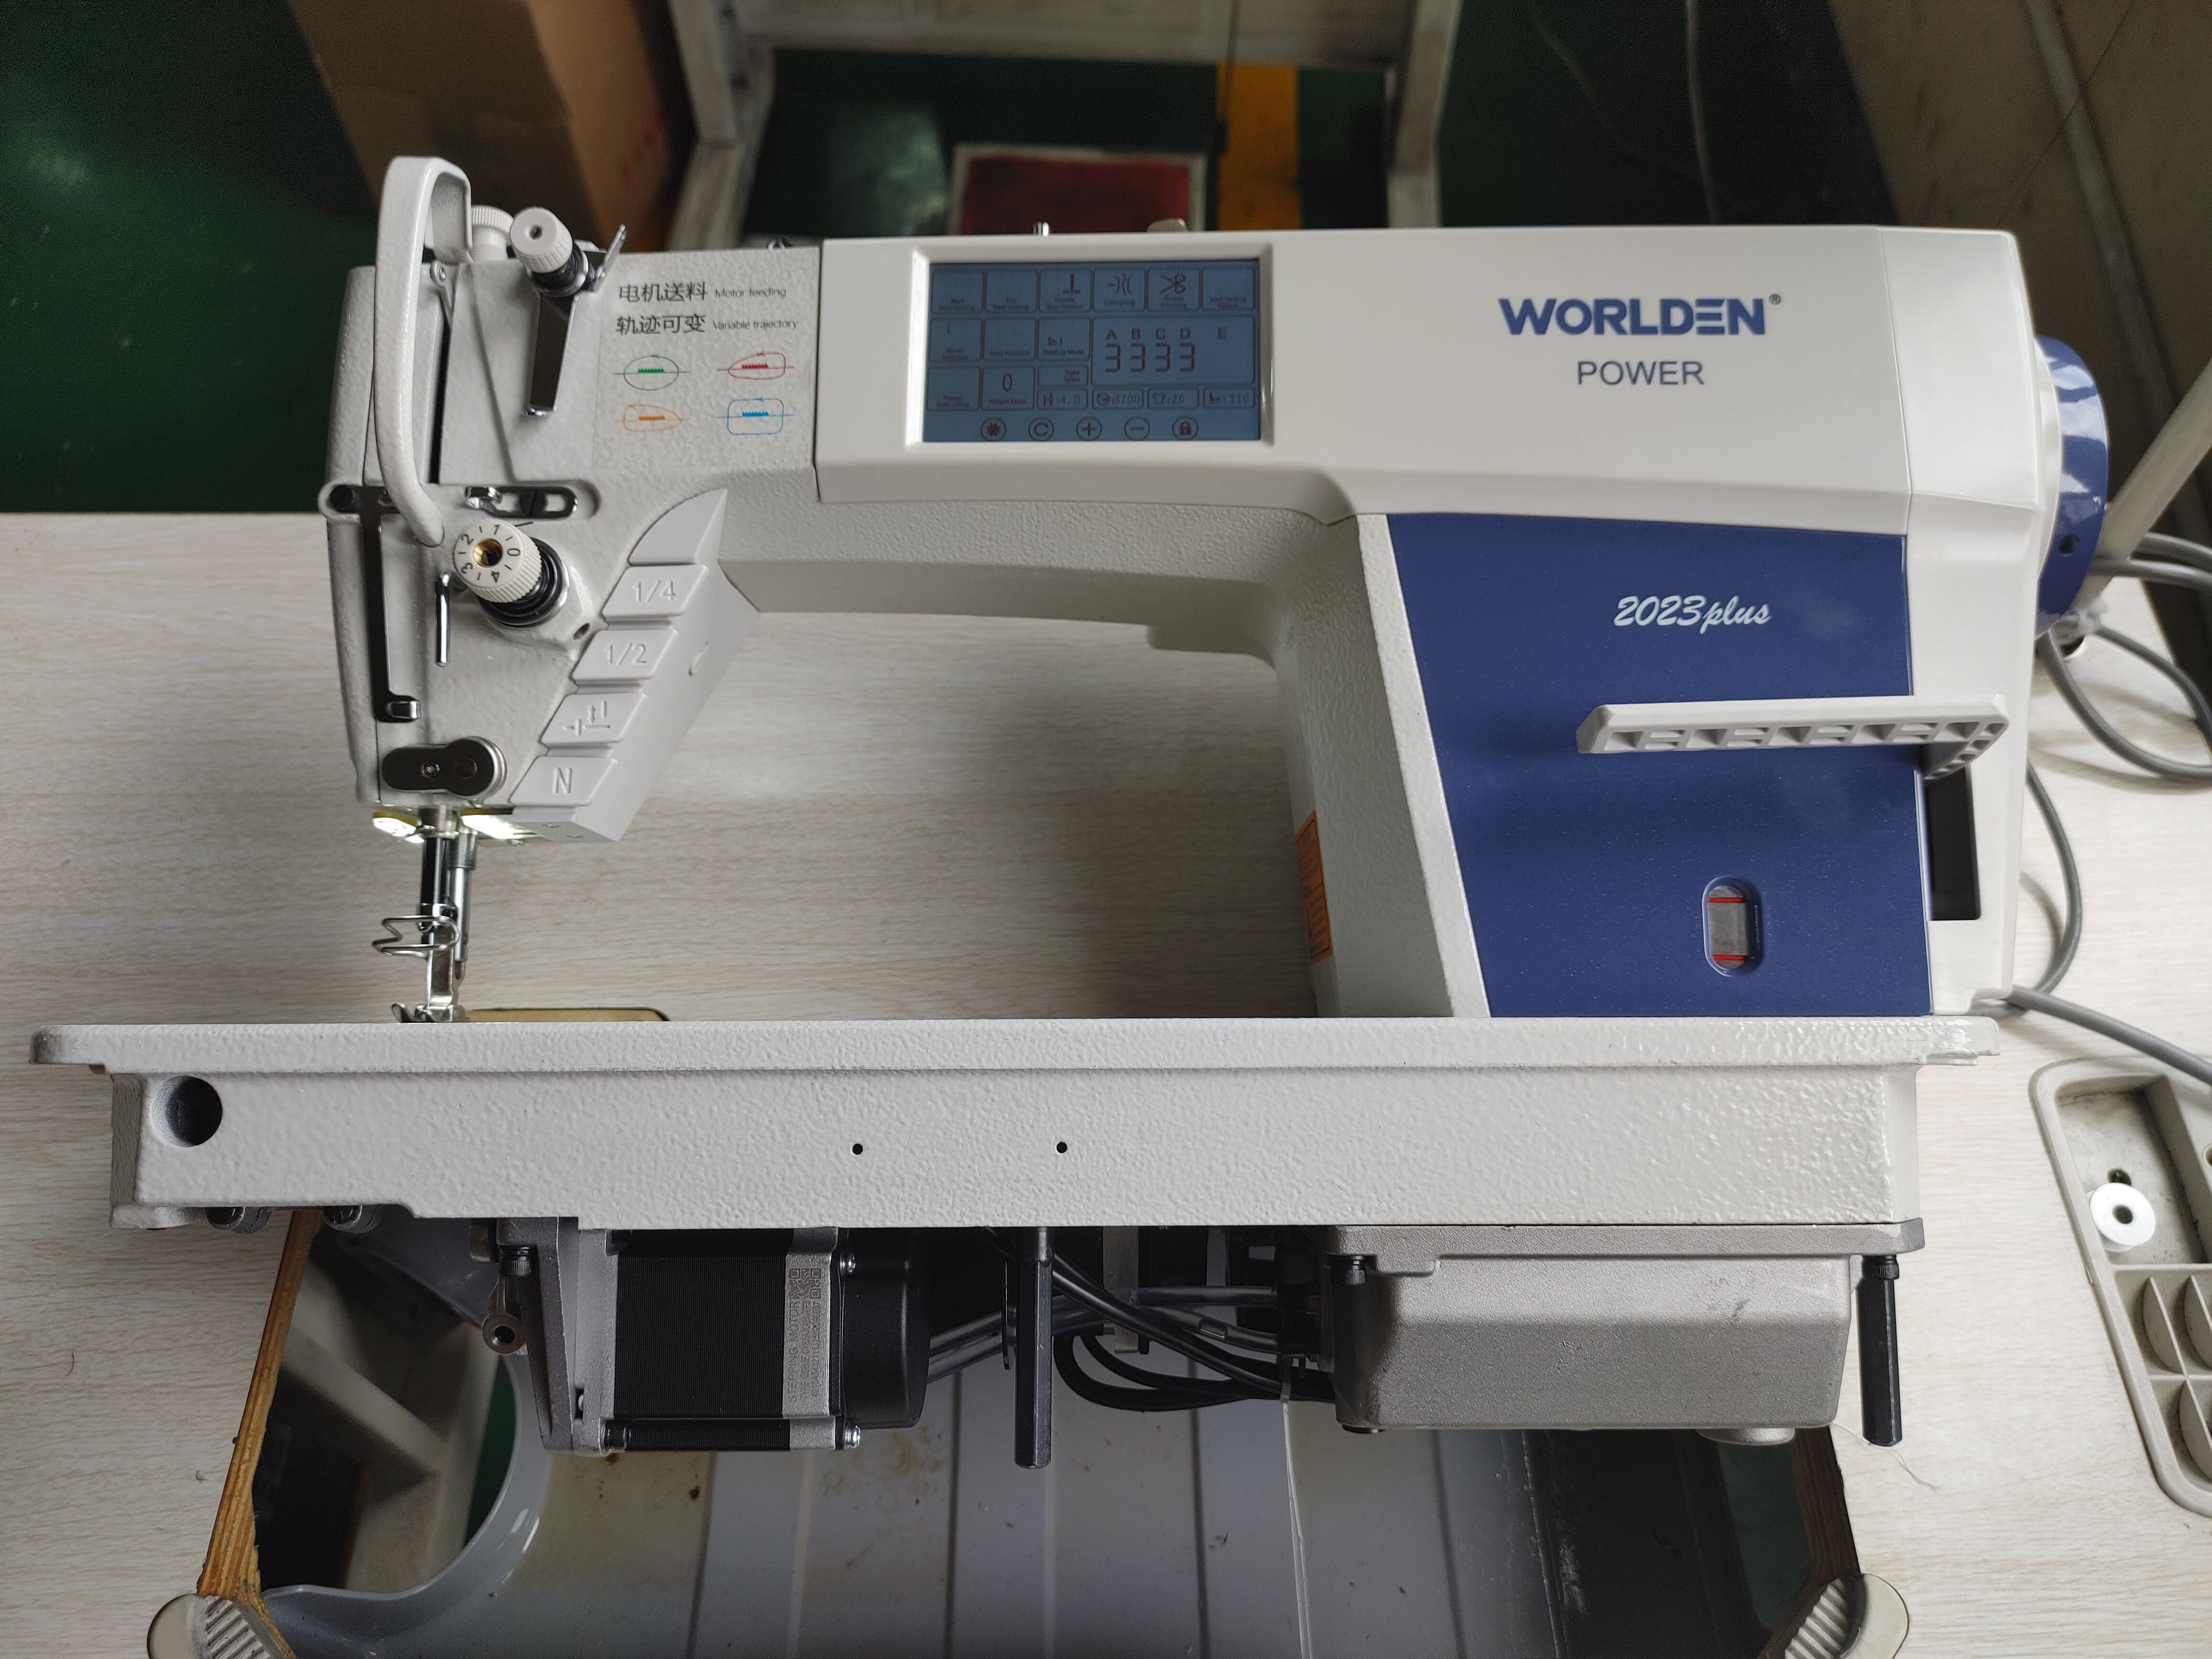 WD-2023 Plus Step Motor Lockstitch Sewing Machine Top Quality